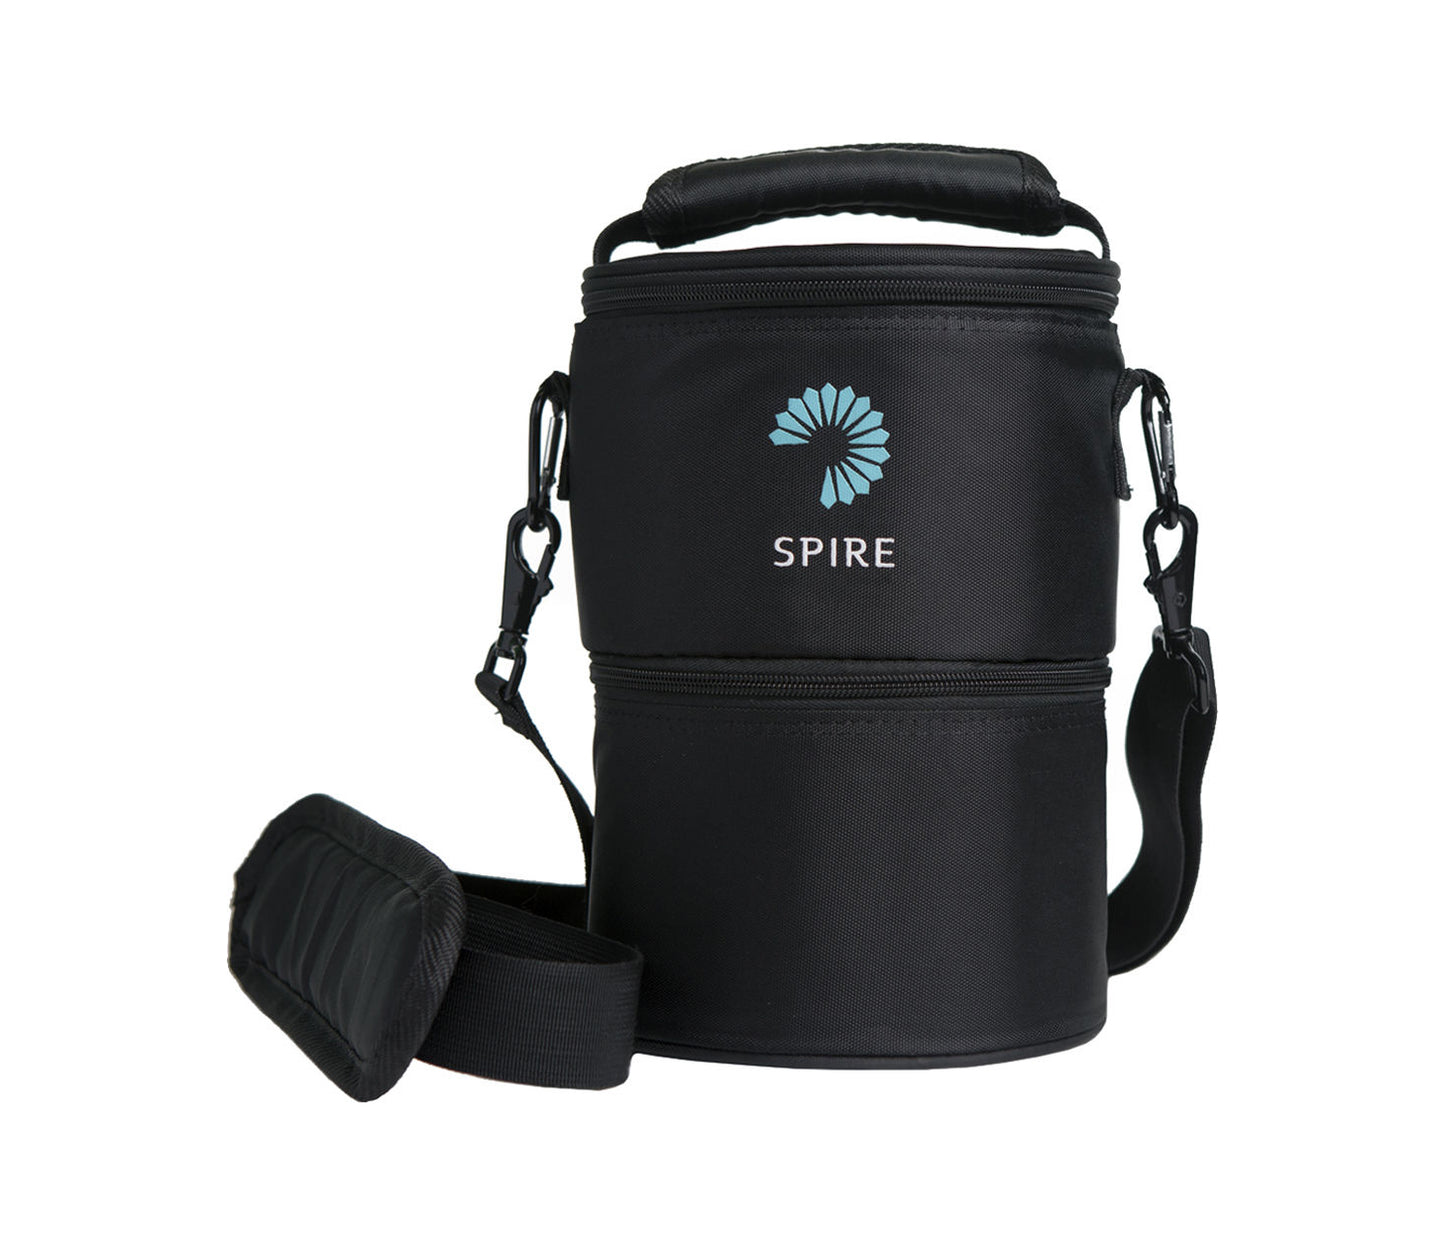 iZotope Spire Studio Travel Bag